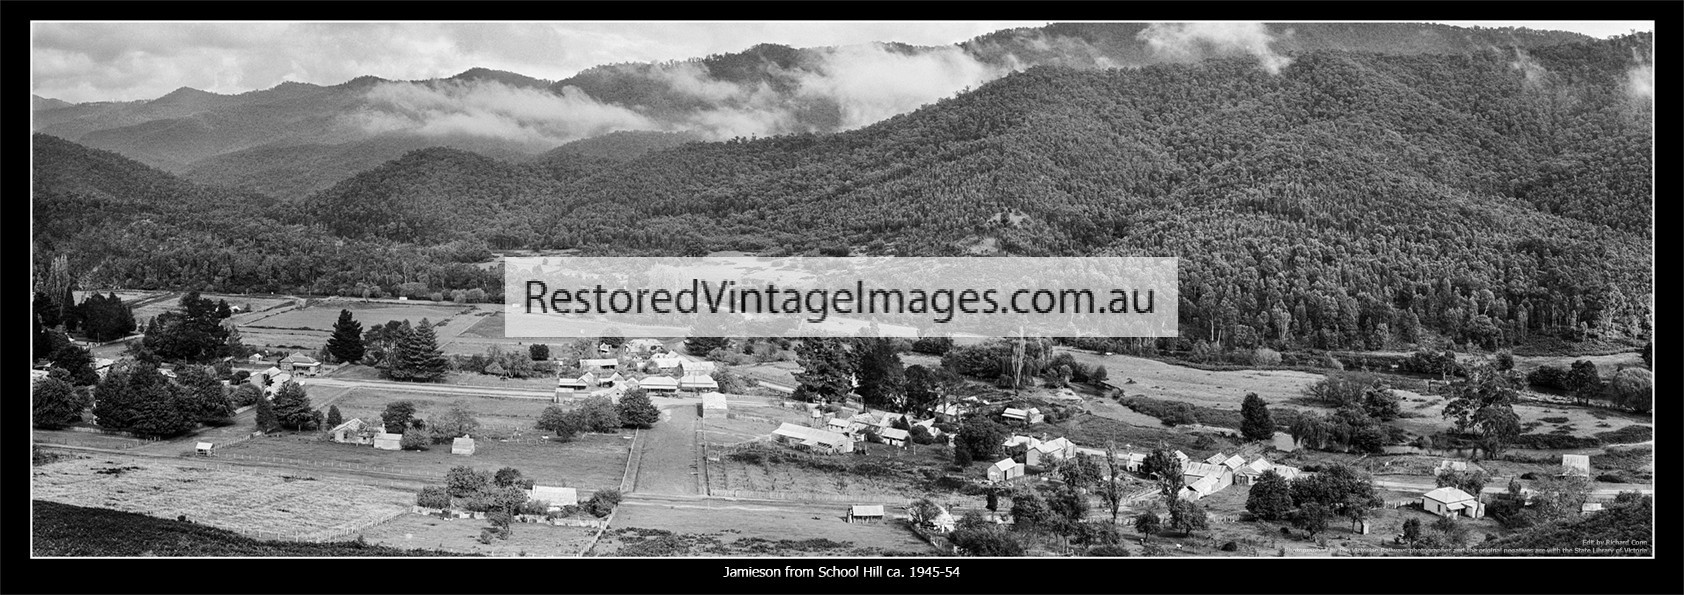 Jamieson Panorama From School Hill 1945 – 54